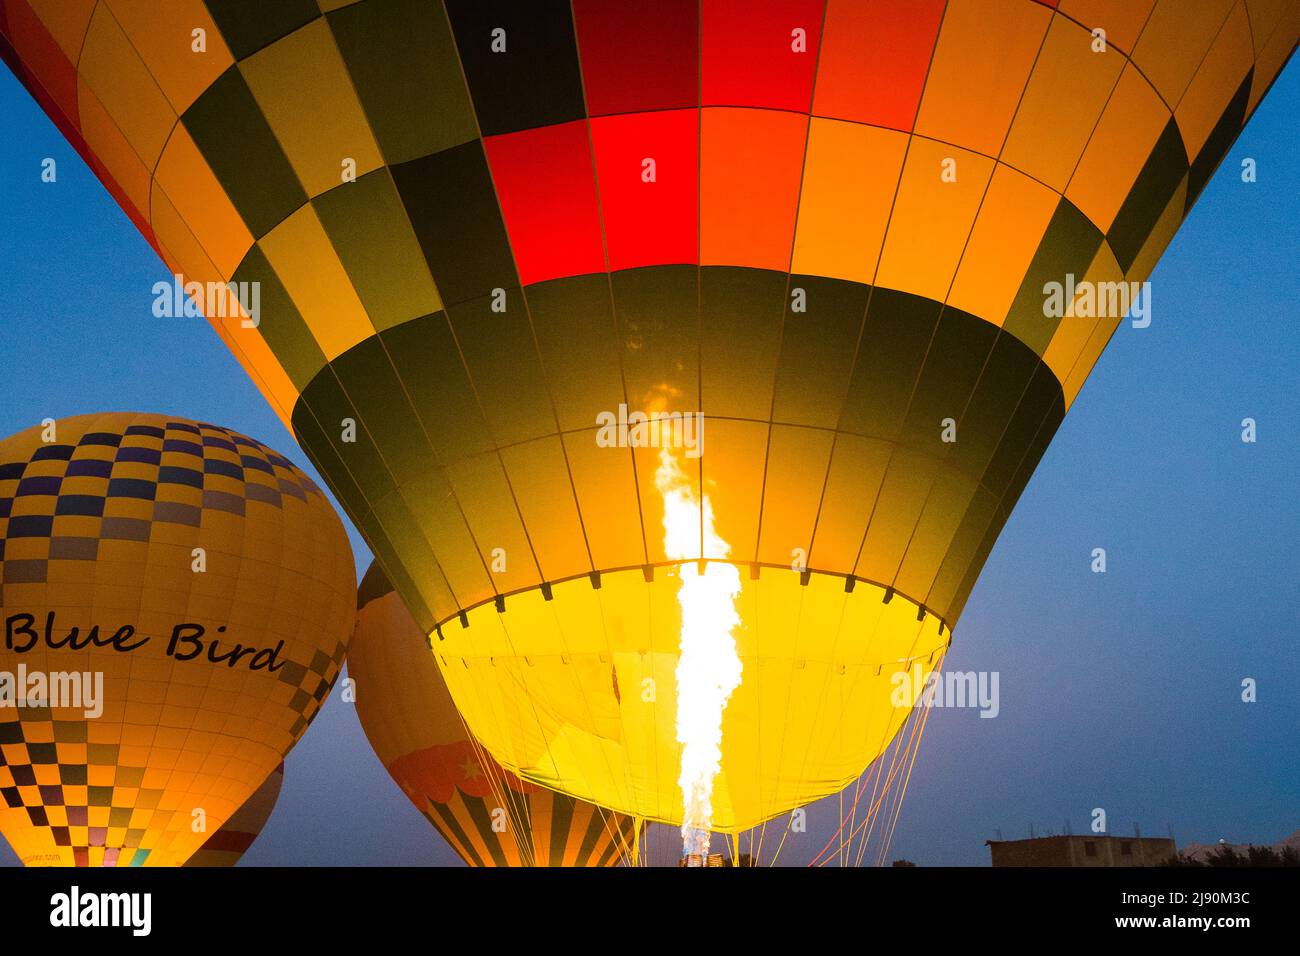 Luxor, Egypt - Hot Air Ballooning Stock Photo